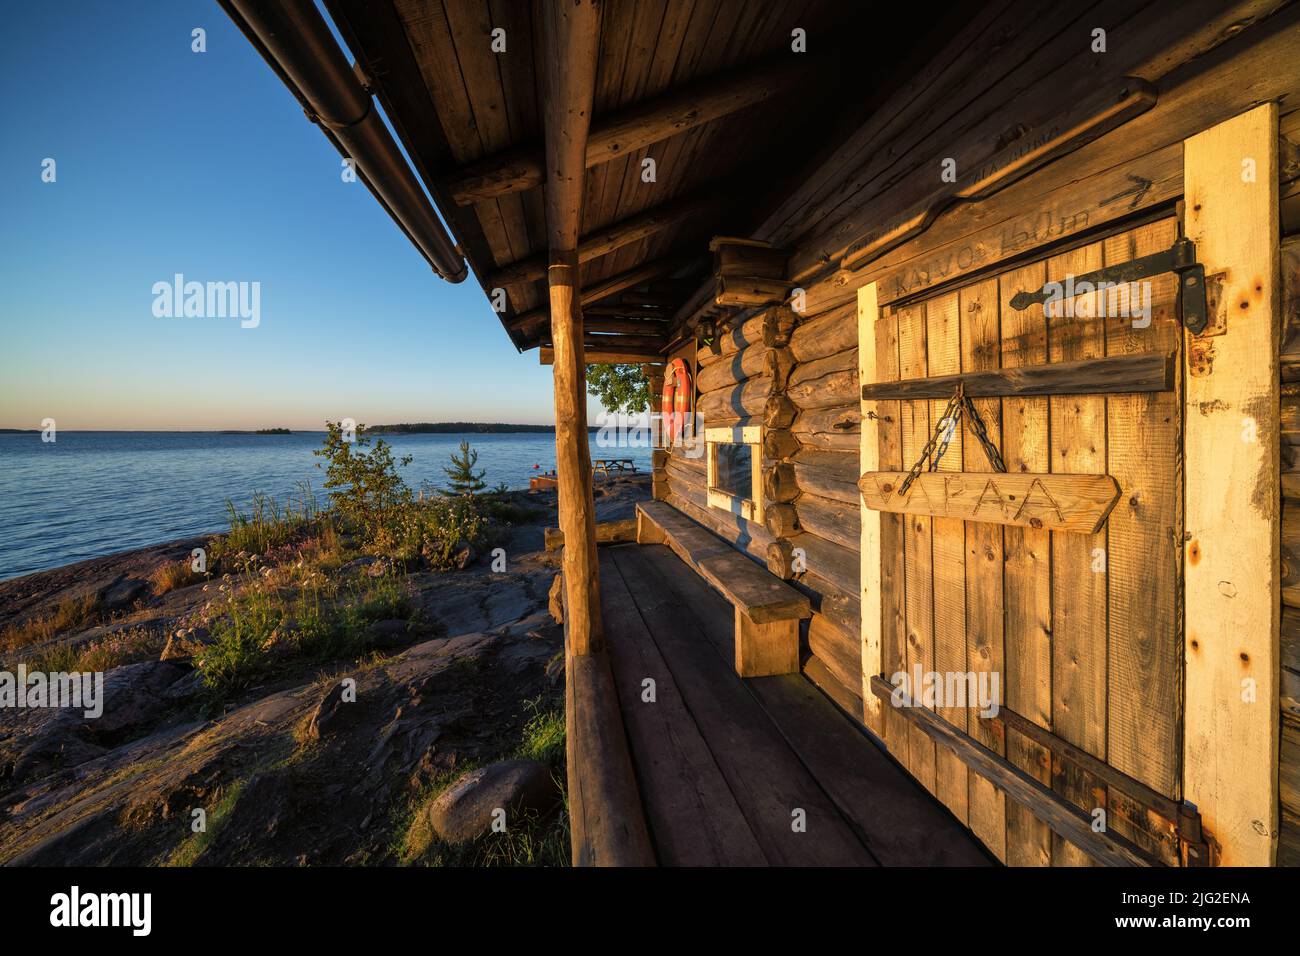 Sauna at Tallholmen island, Sipoo, Finland Stock Photo